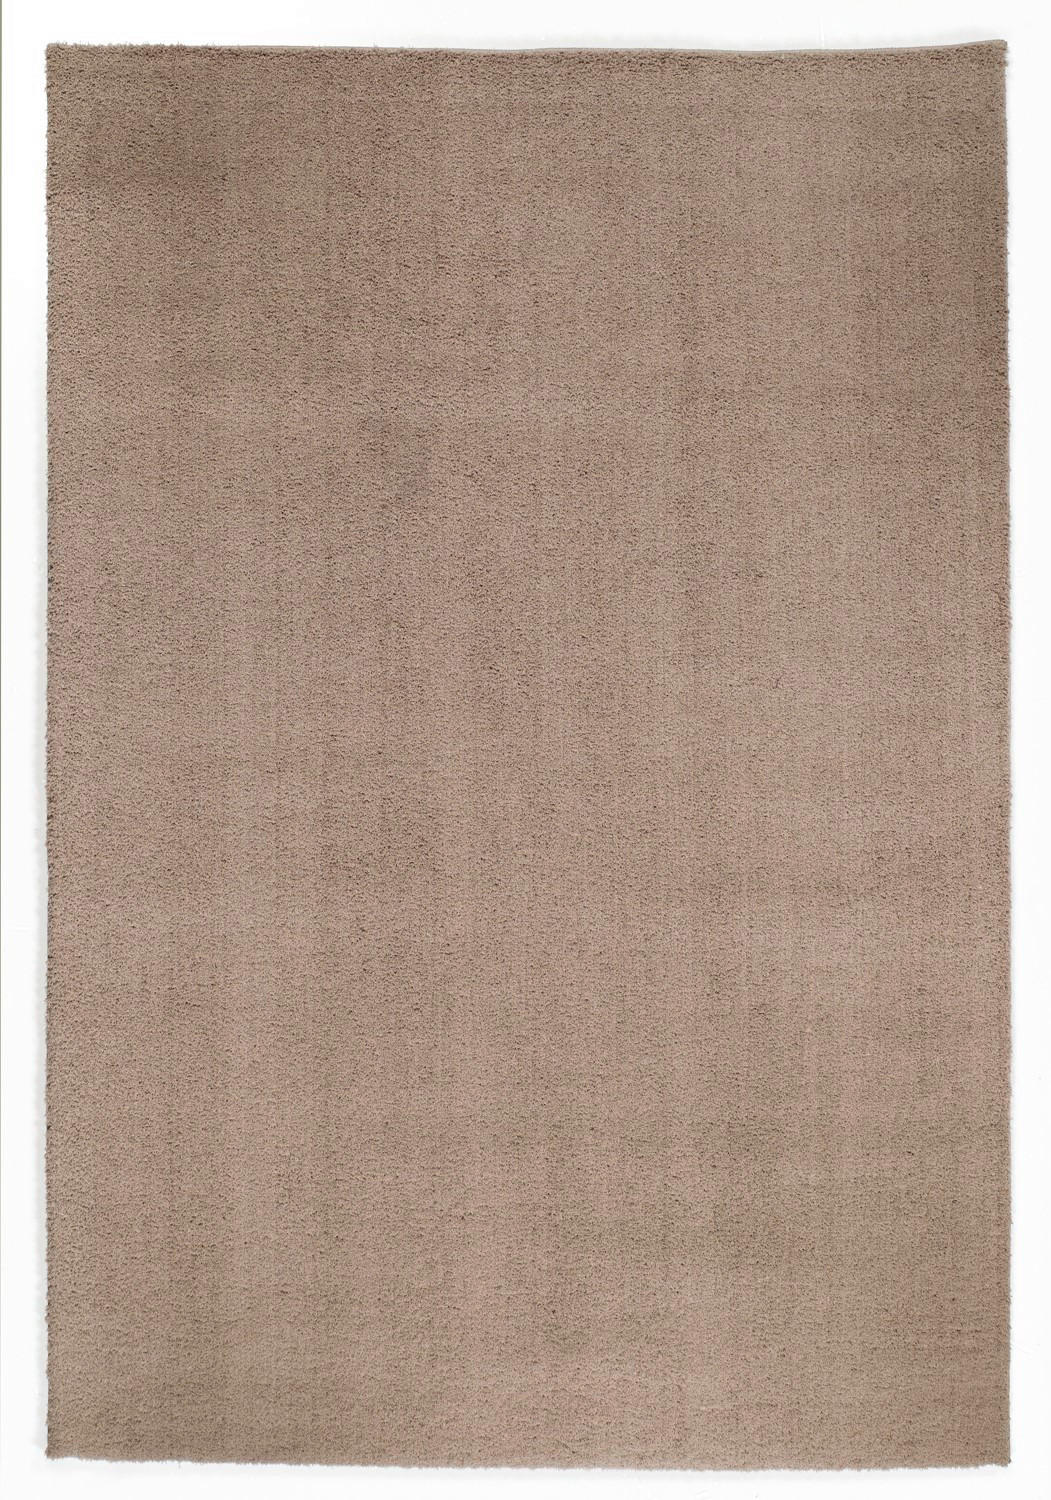 WEBTEPPICH  200/290 cm  Beige   - Beige, Basics, Textil (200/290cm) - Novel